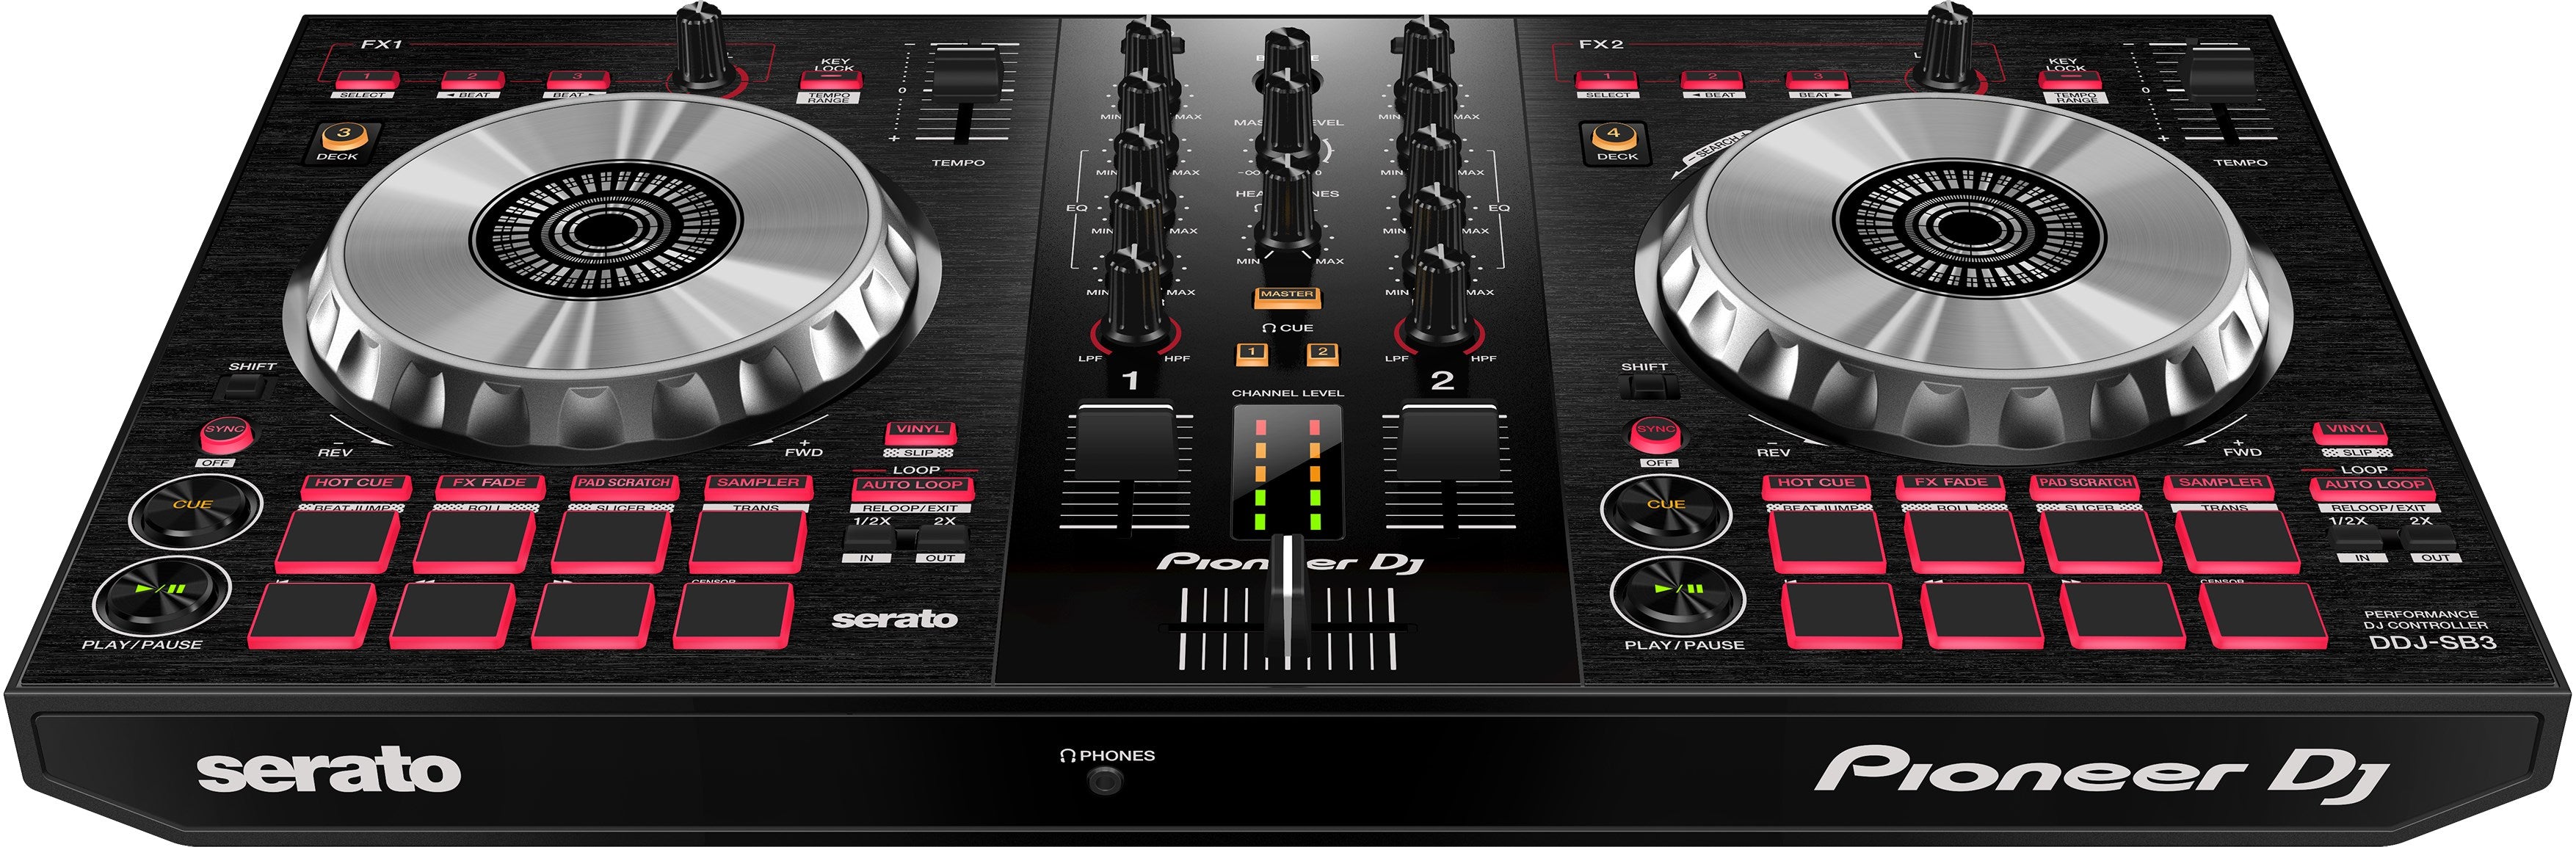 Pioneer DDJ-SB3 2-channel DJ controller for Serato DJ Lite (black) - Golchha Computers